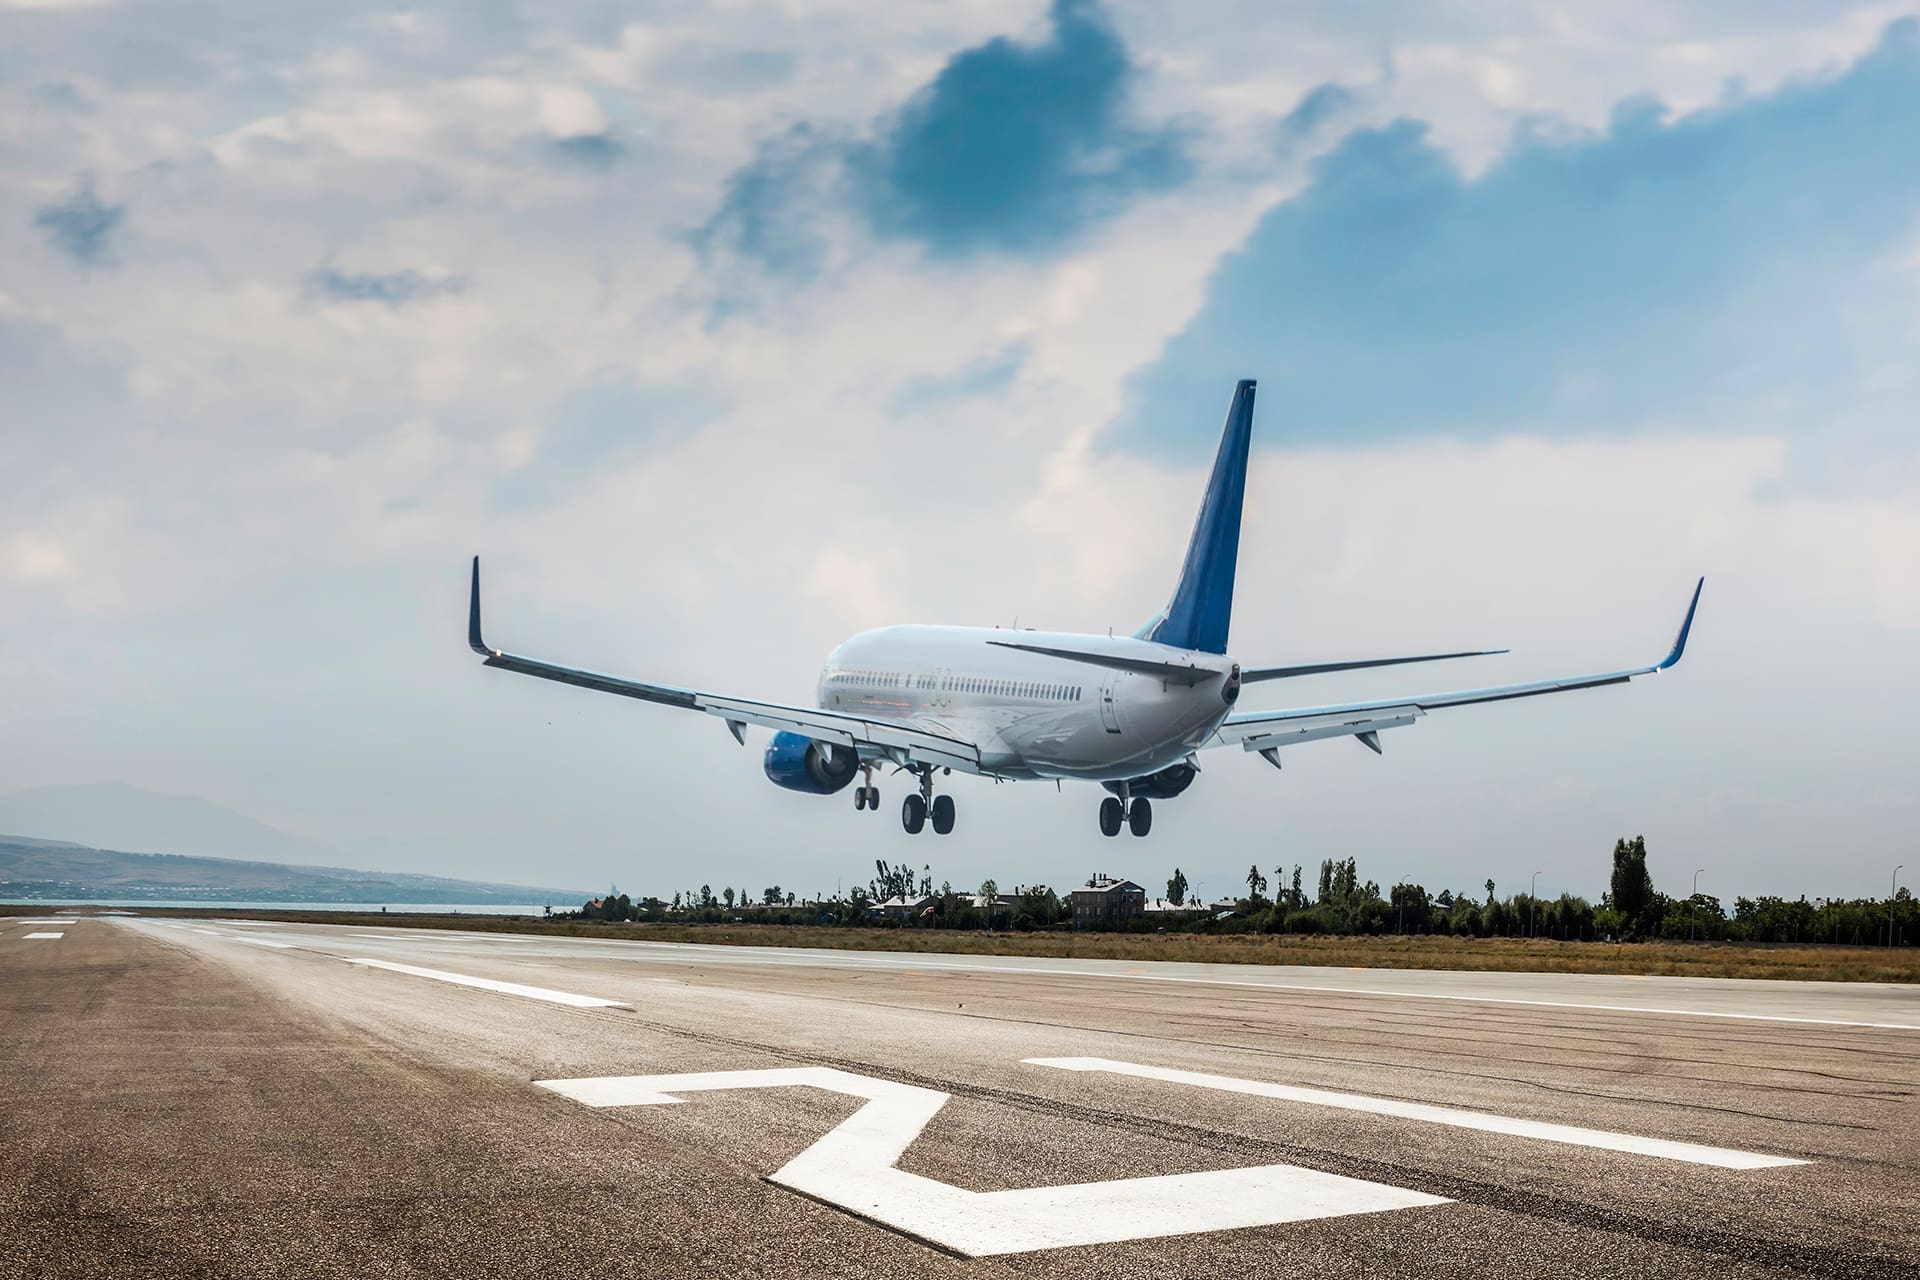 Passenger plane taking off on runway